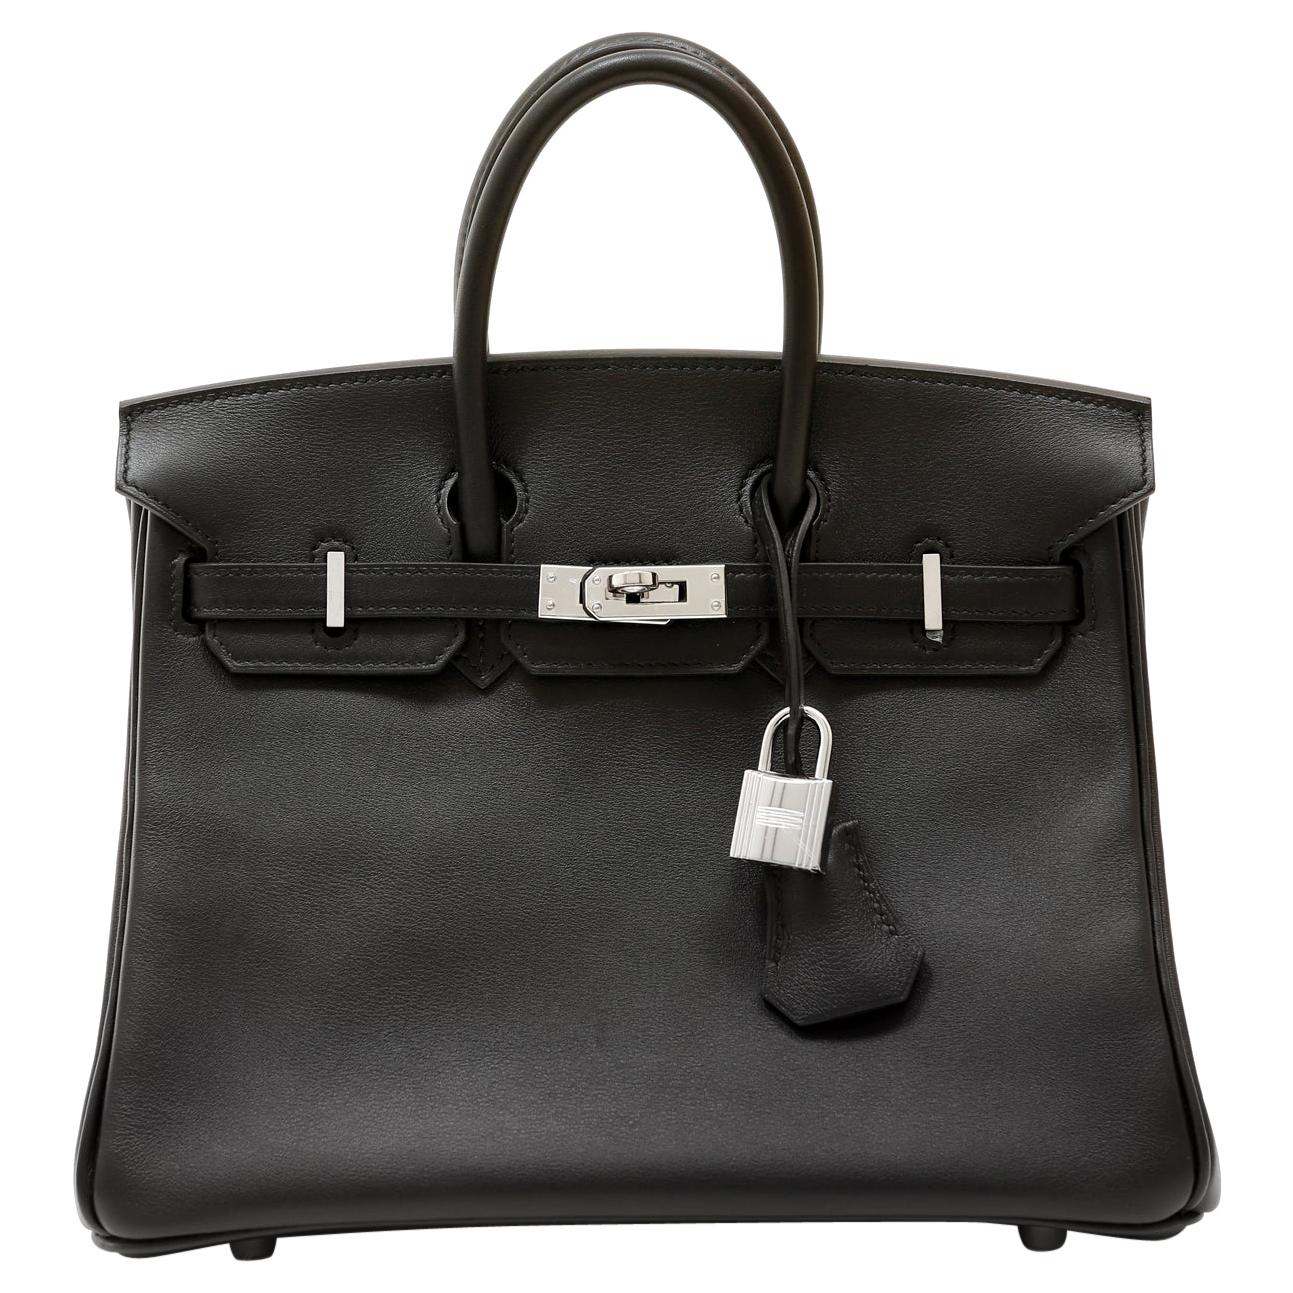 Hermès Black Swift Leather 25 cm Birkin Bag